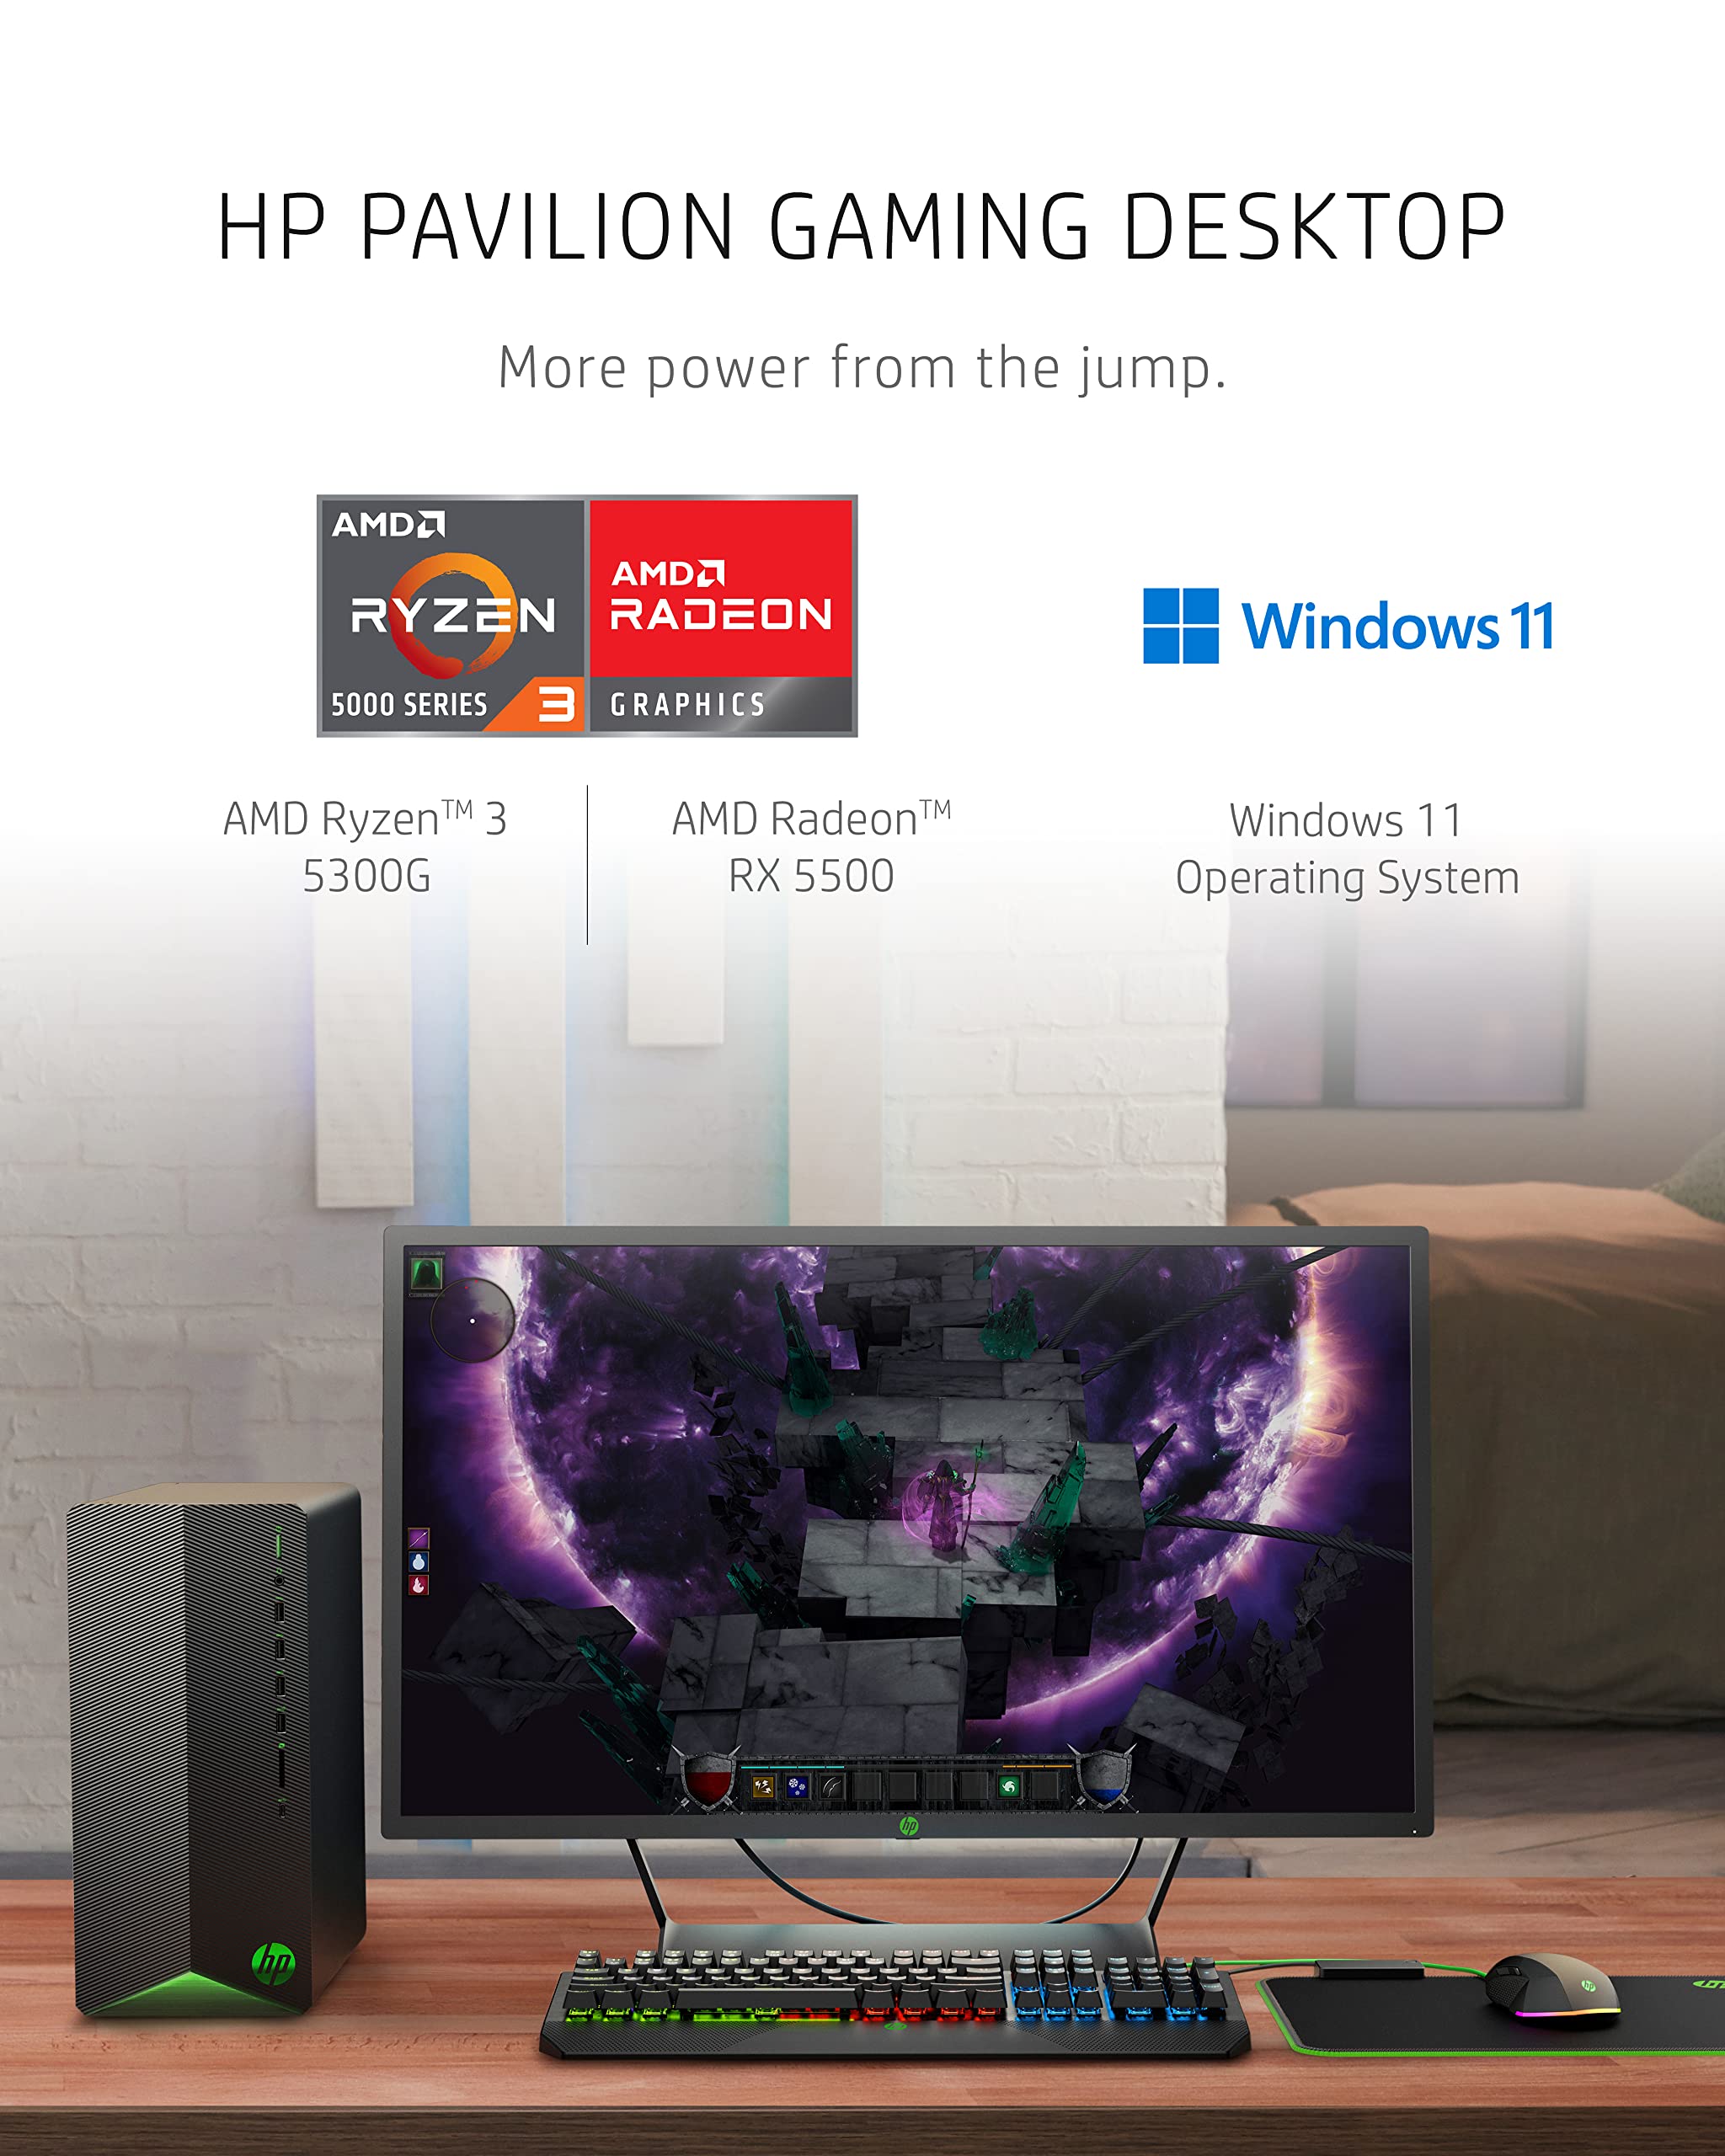 HP Pavilion Gaming Desktop, AMD Radeon RX 5500, AMD Ryzen 3 5300G Processor, 8 GB RAM, 512 GB SSD, Windows 11 Home, 9 USB Ports, Keyboard and Mouse Combo, Pre-Built PC Tower (TG01-2022, 2022)